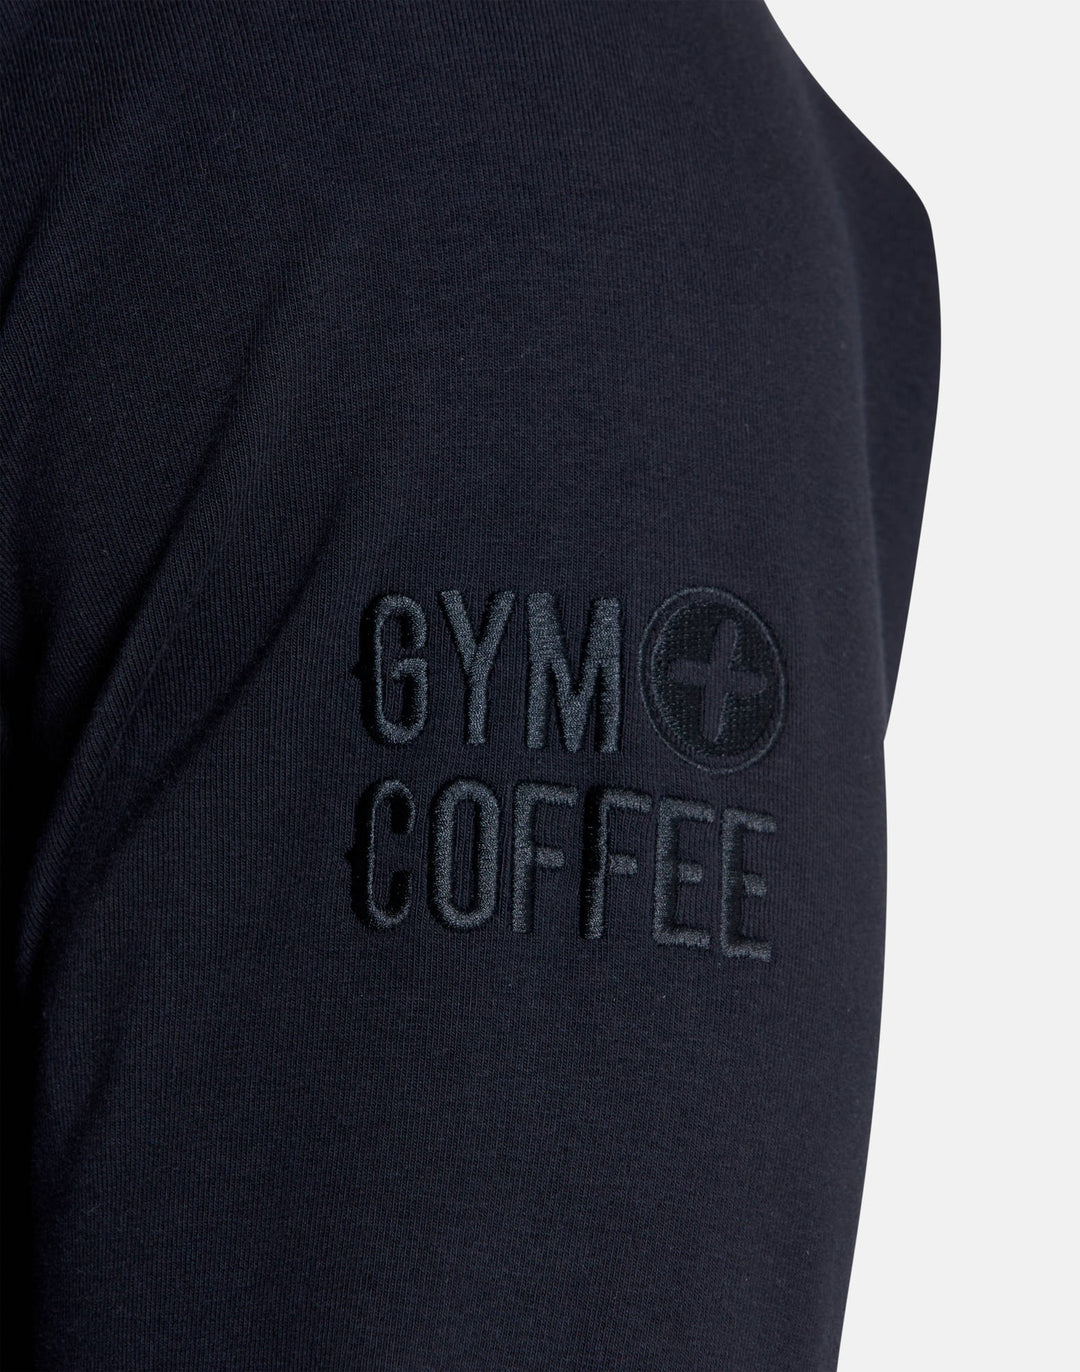 Gym+Coffee Essential Crew (Mens) - Black